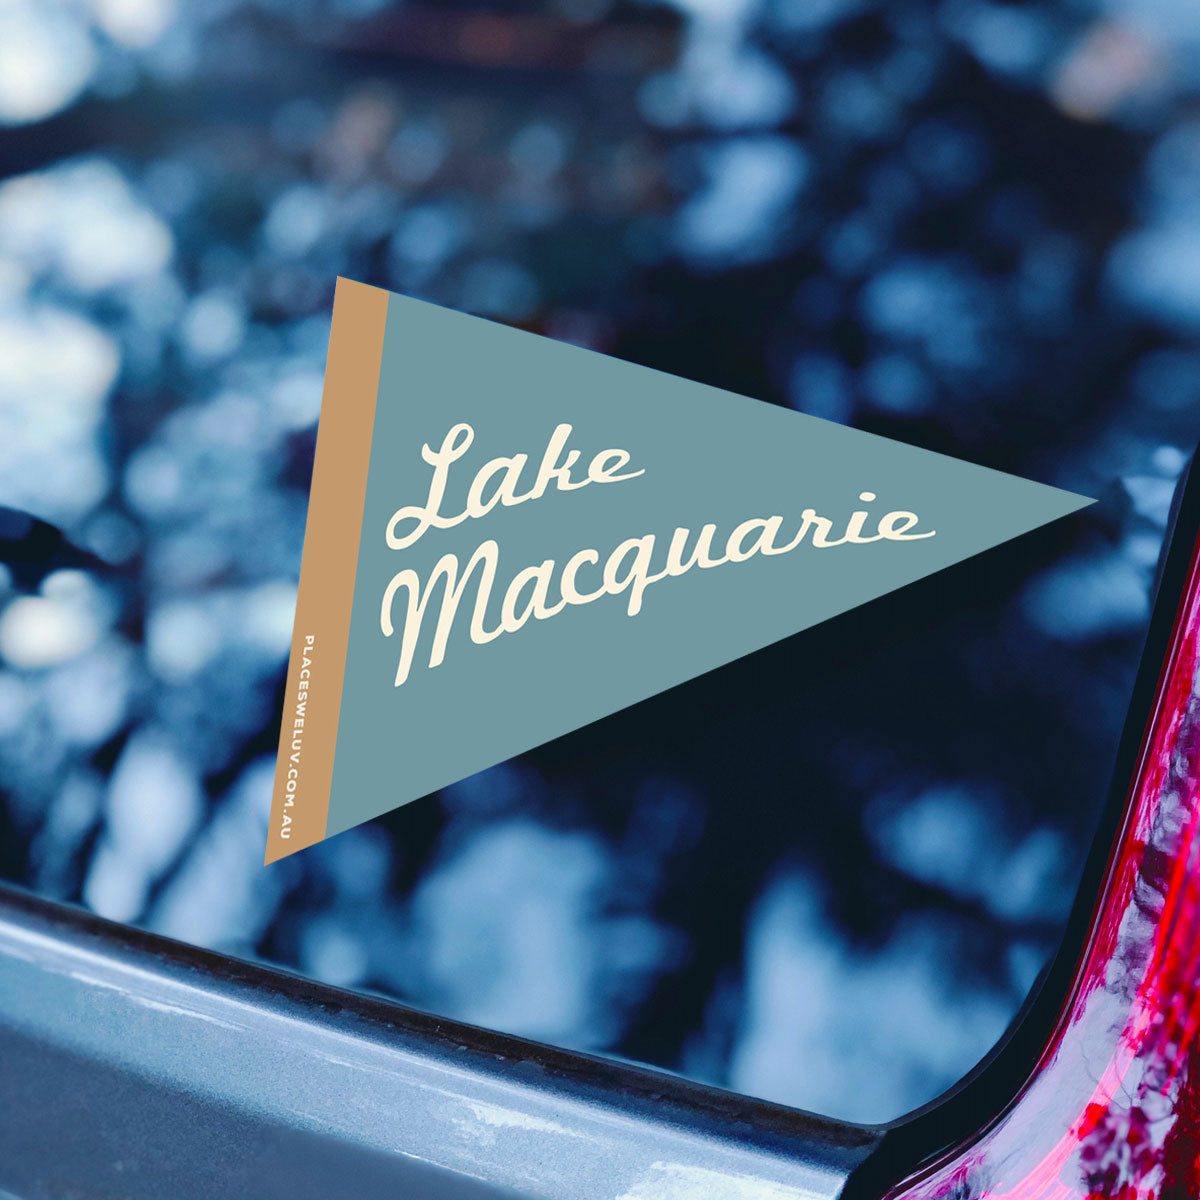 Lake Macquarie retro travel flag decal by places we luv